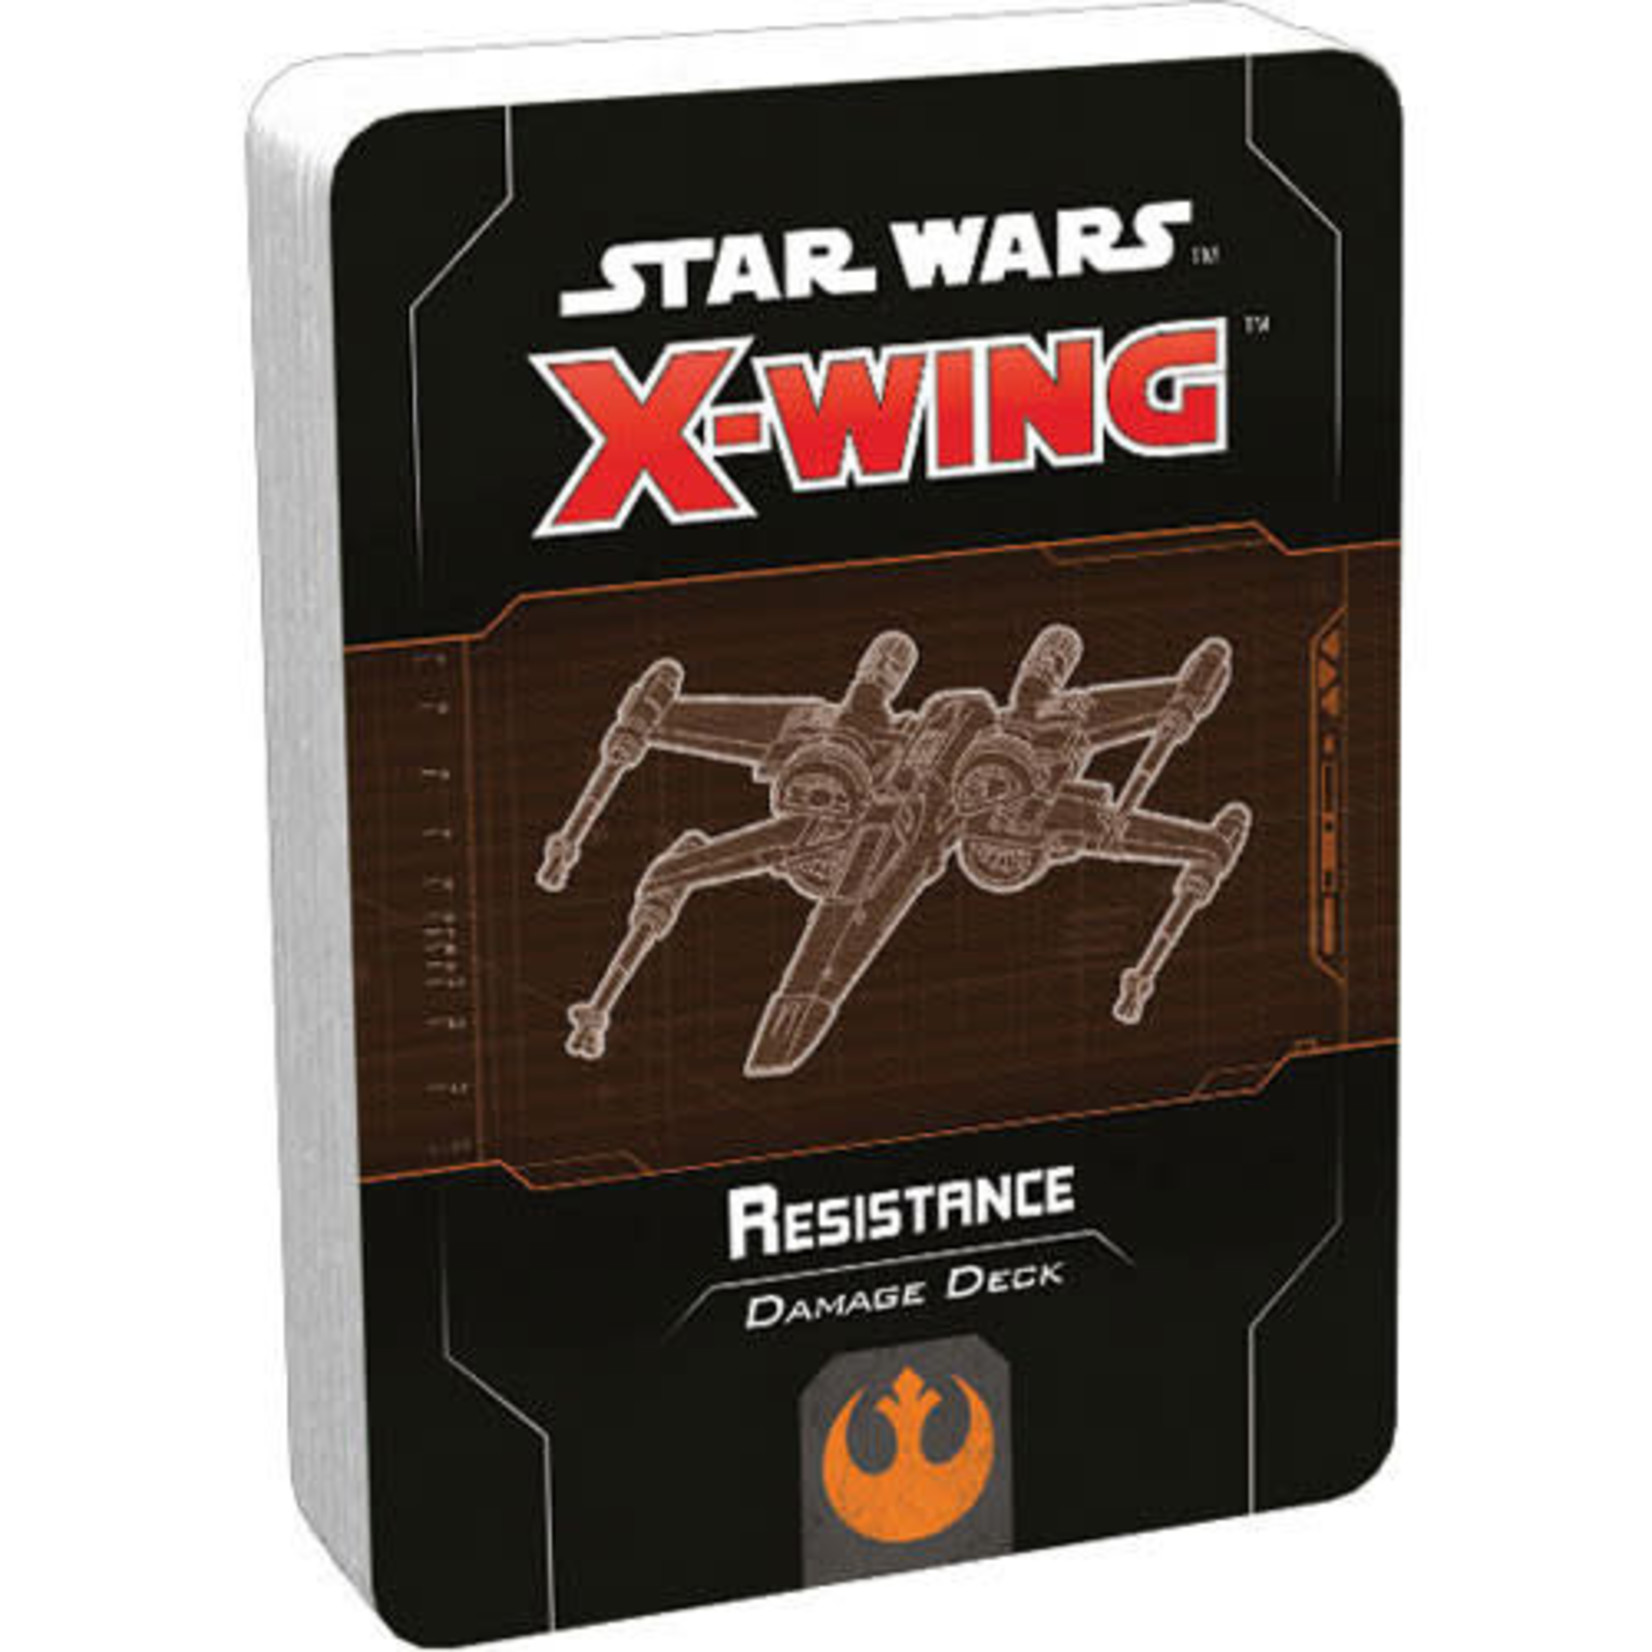 Star Wars X-Wing 2e: Resistance Damage Deck